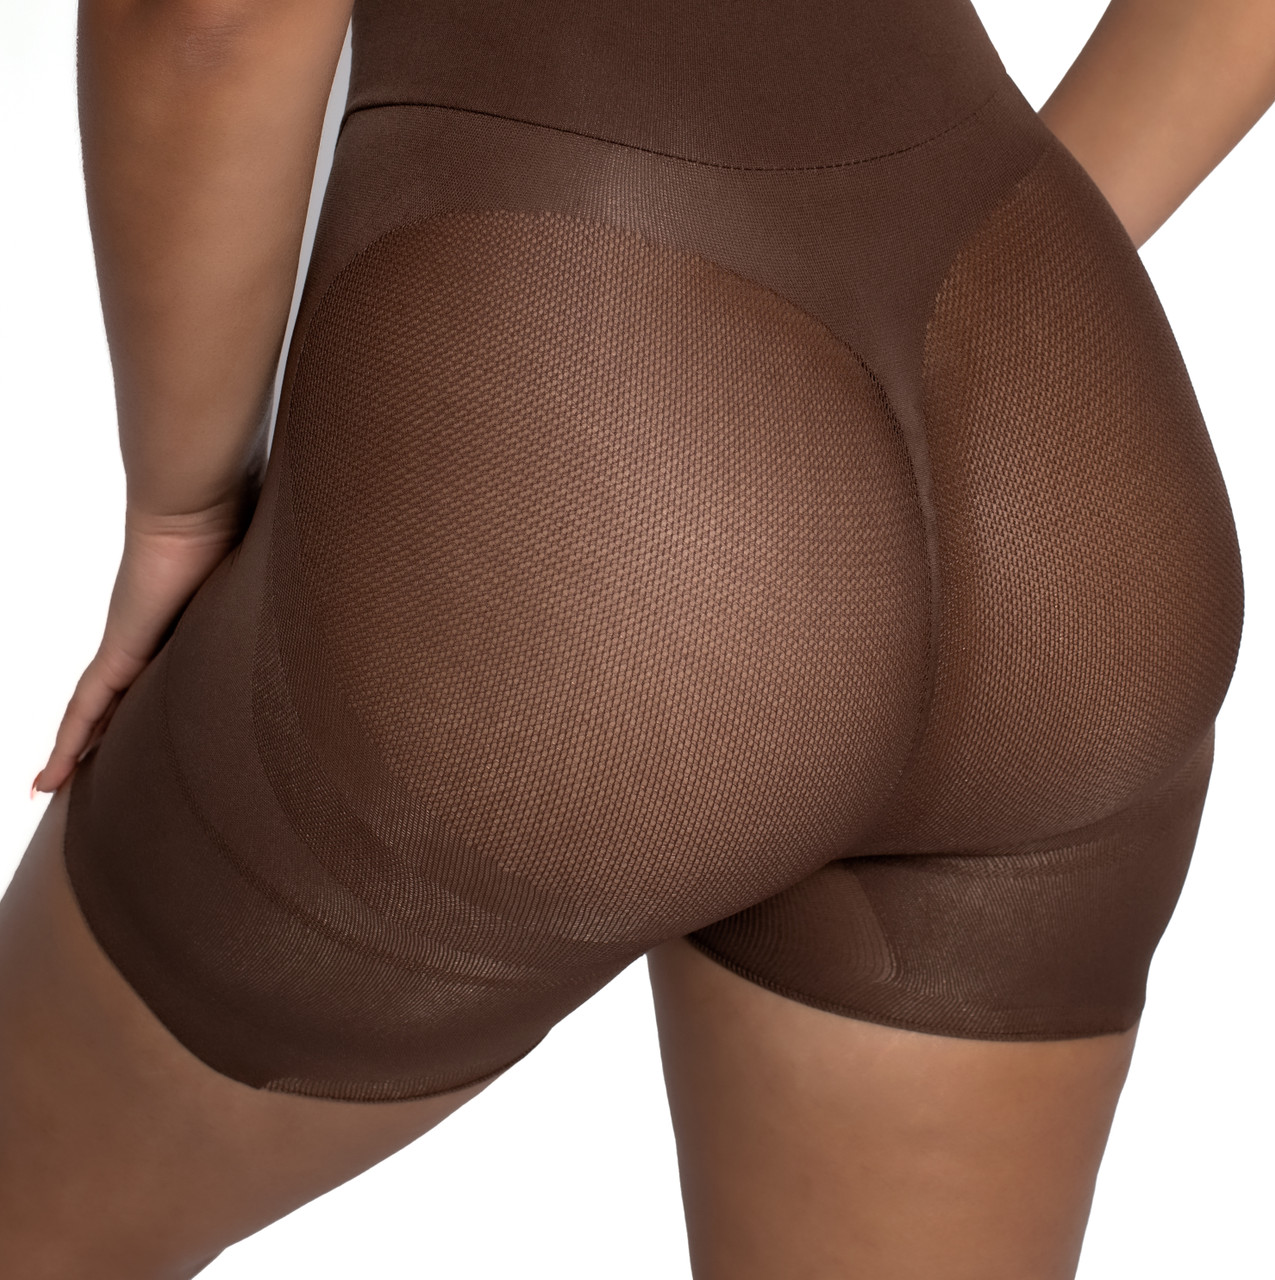 Shop Yahaira - Happy Butt No.7 body shaper features: *